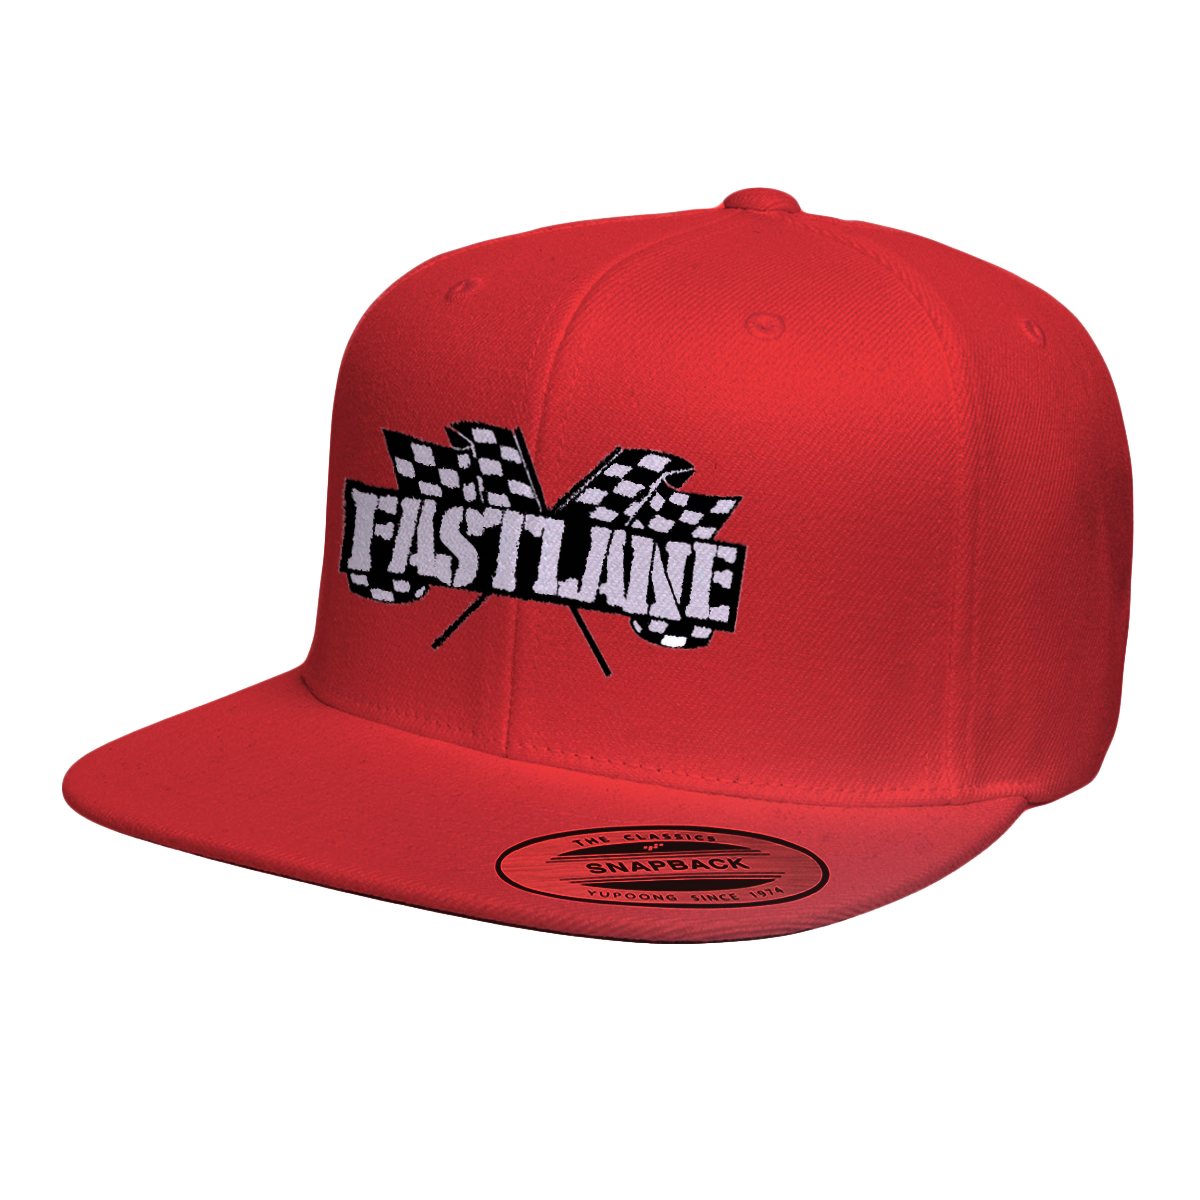 Fastlane Logo Snapback Hat